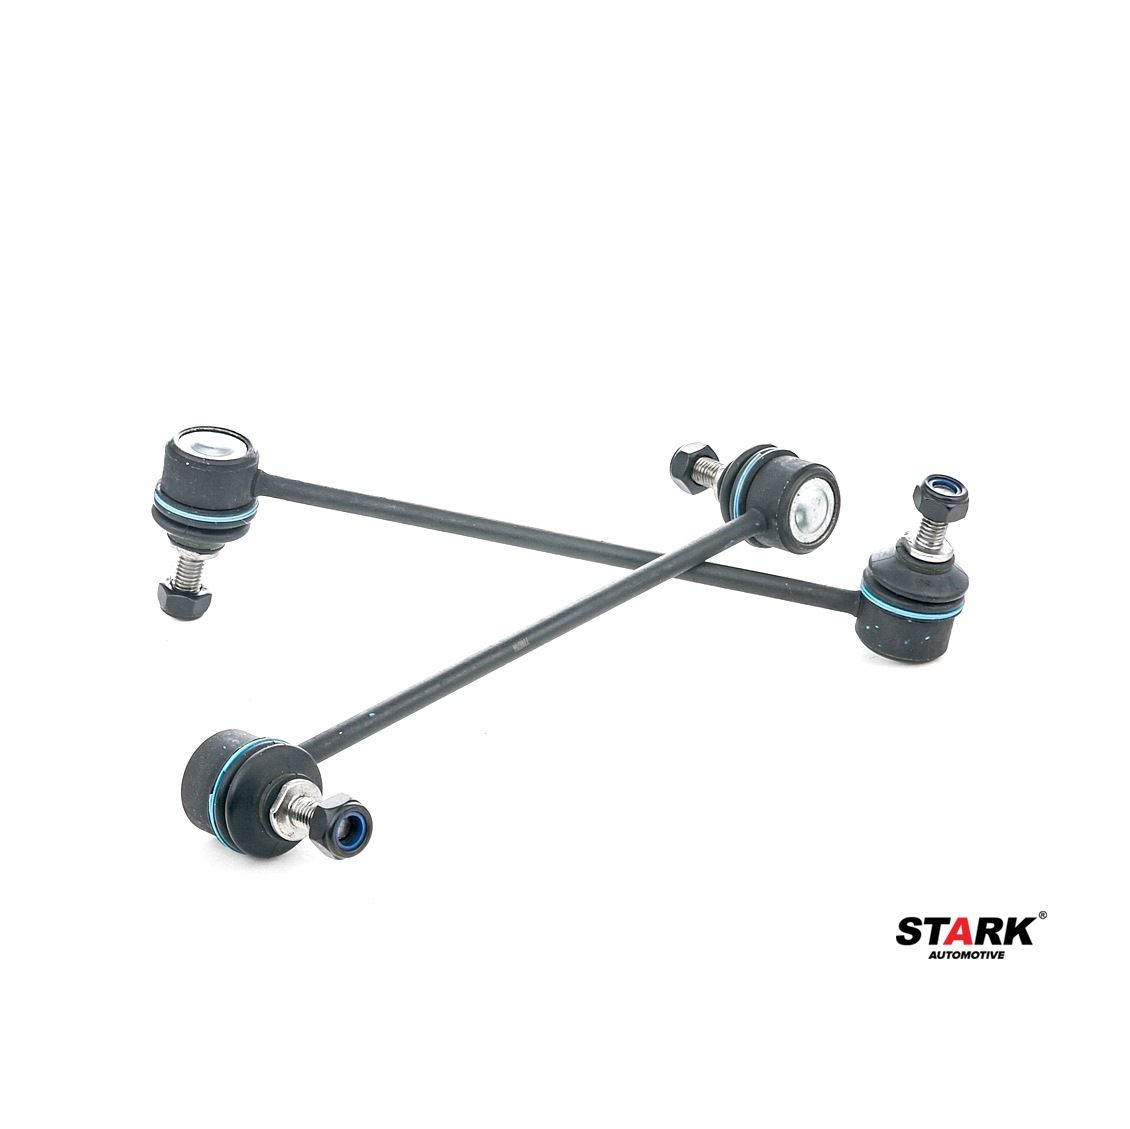 STARK SKRKS-4420024 Control arm repair kit 1130273